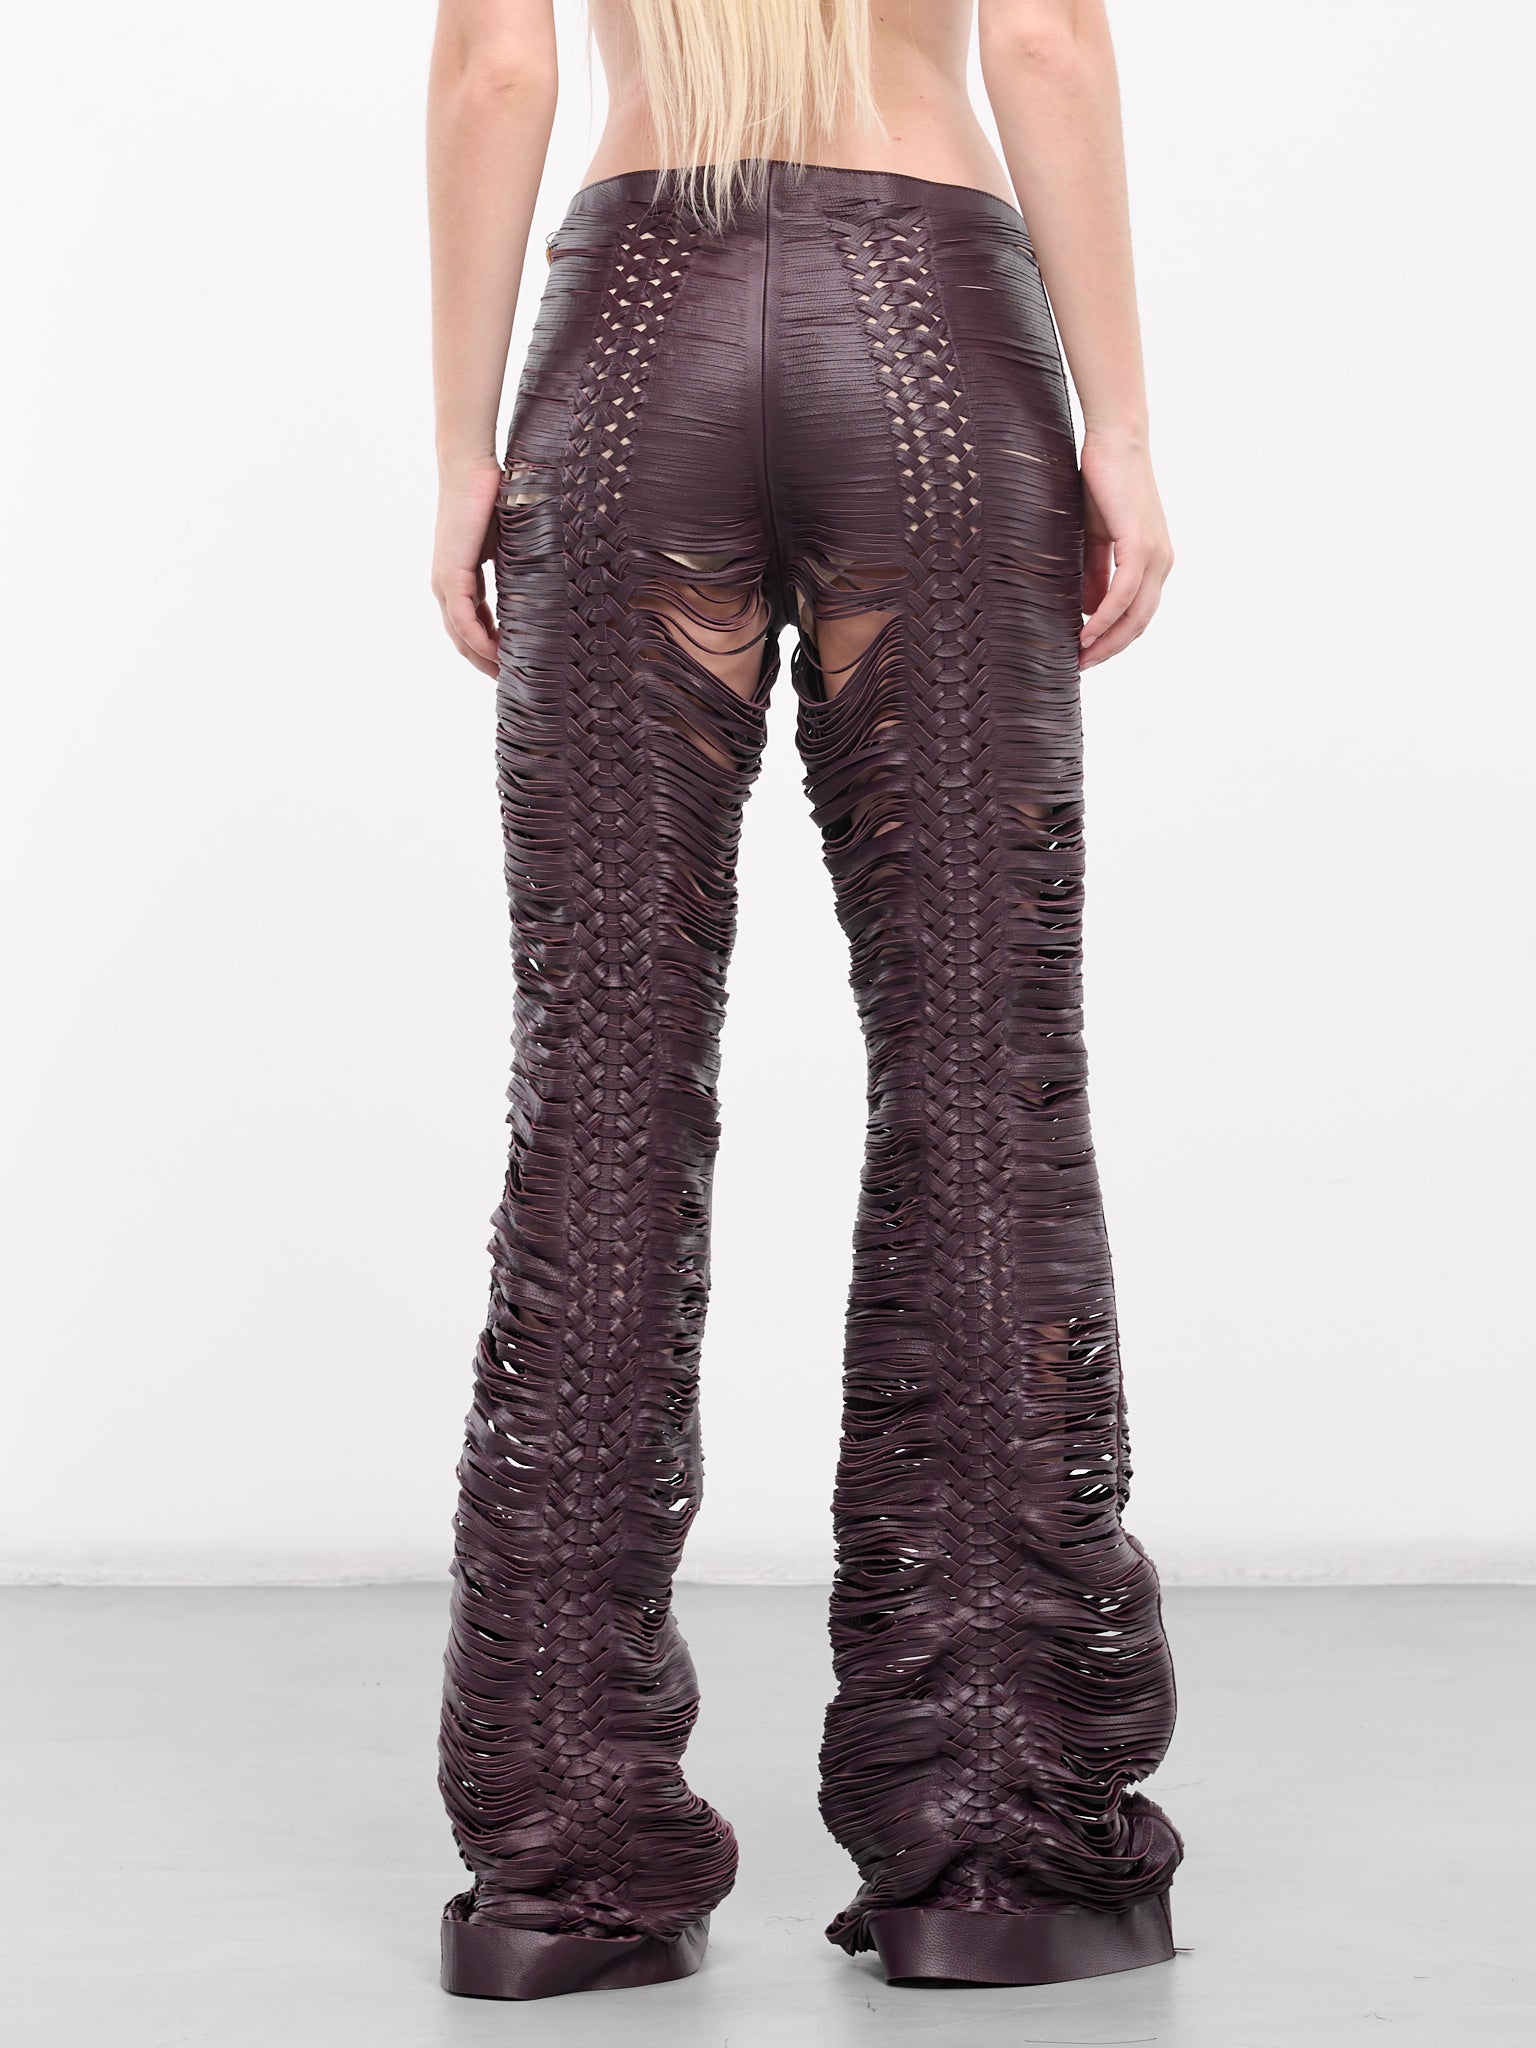 Leather Lace Pants (SWP201-PN002-AUBERGINE)